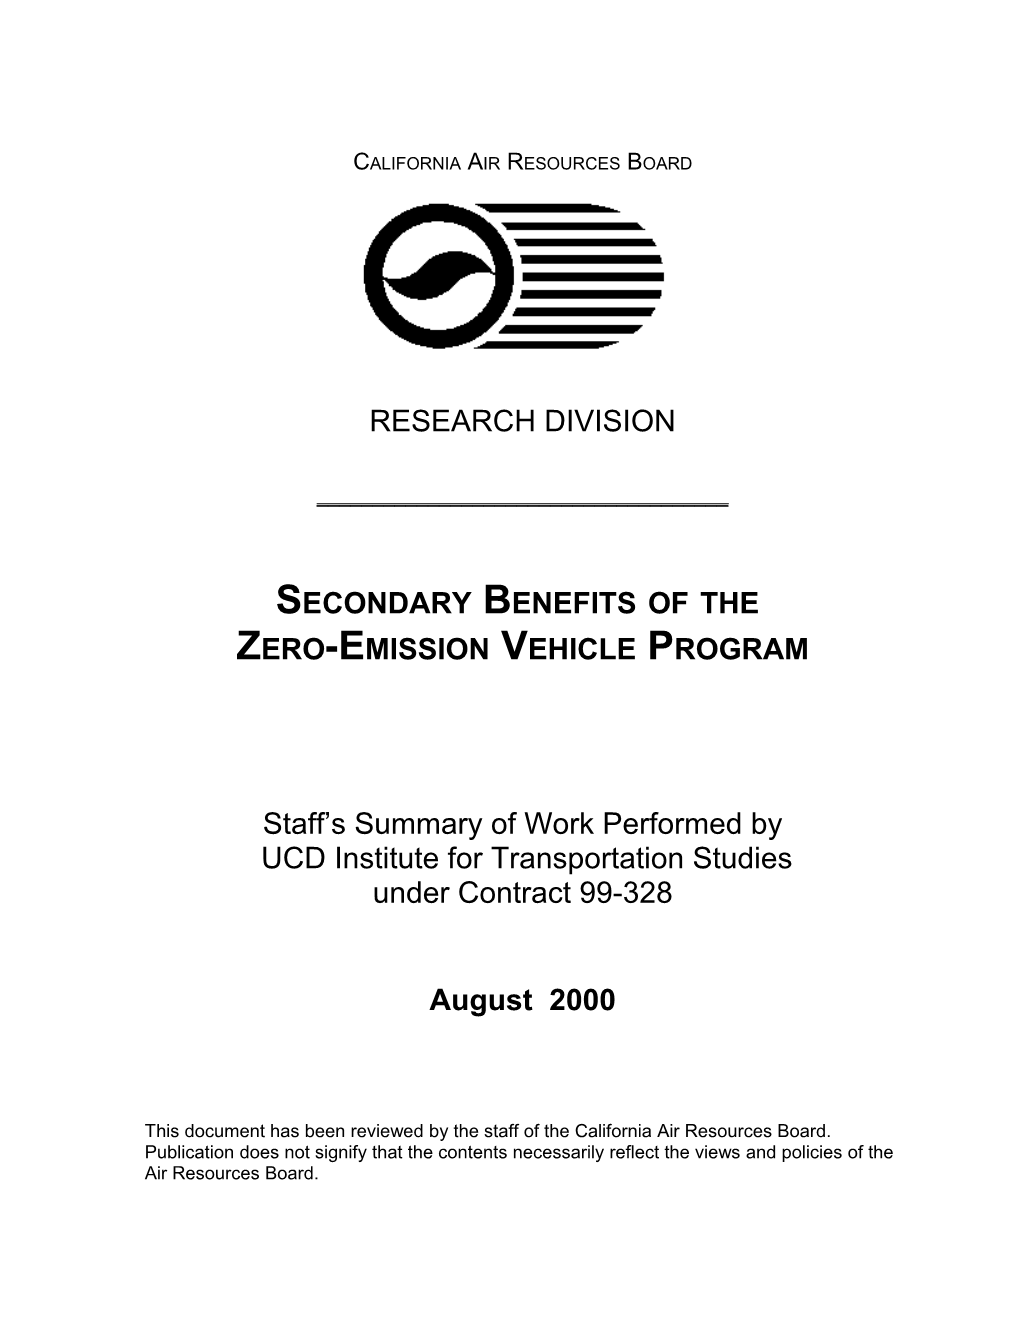 Secondary Benefits of the ZEV Program